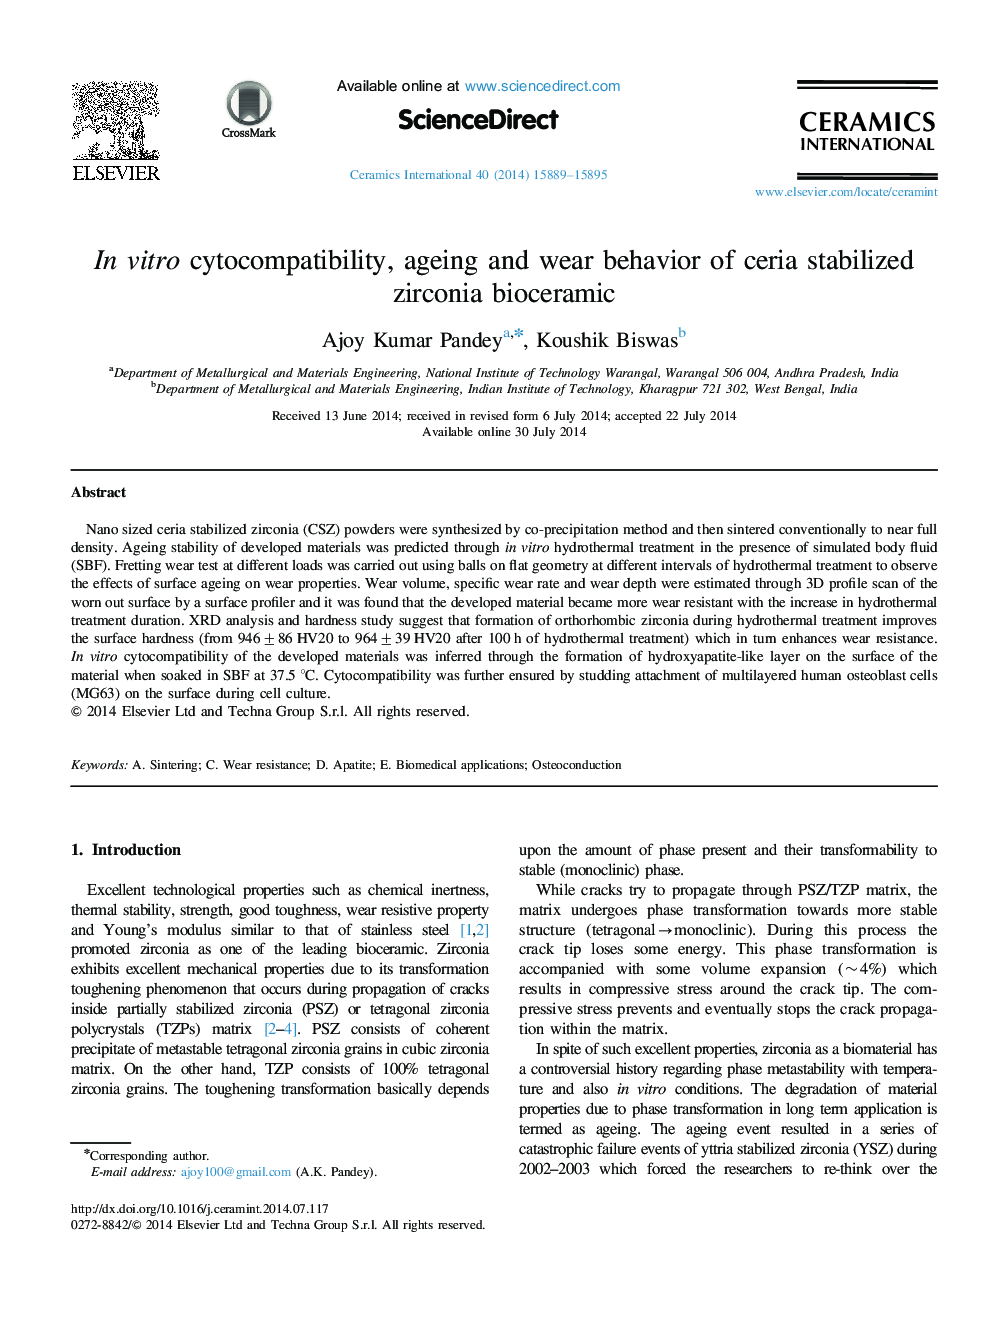 In vitro cytocompatibility, ageing and wear behavior of ceria stabilized zirconia bioceramic